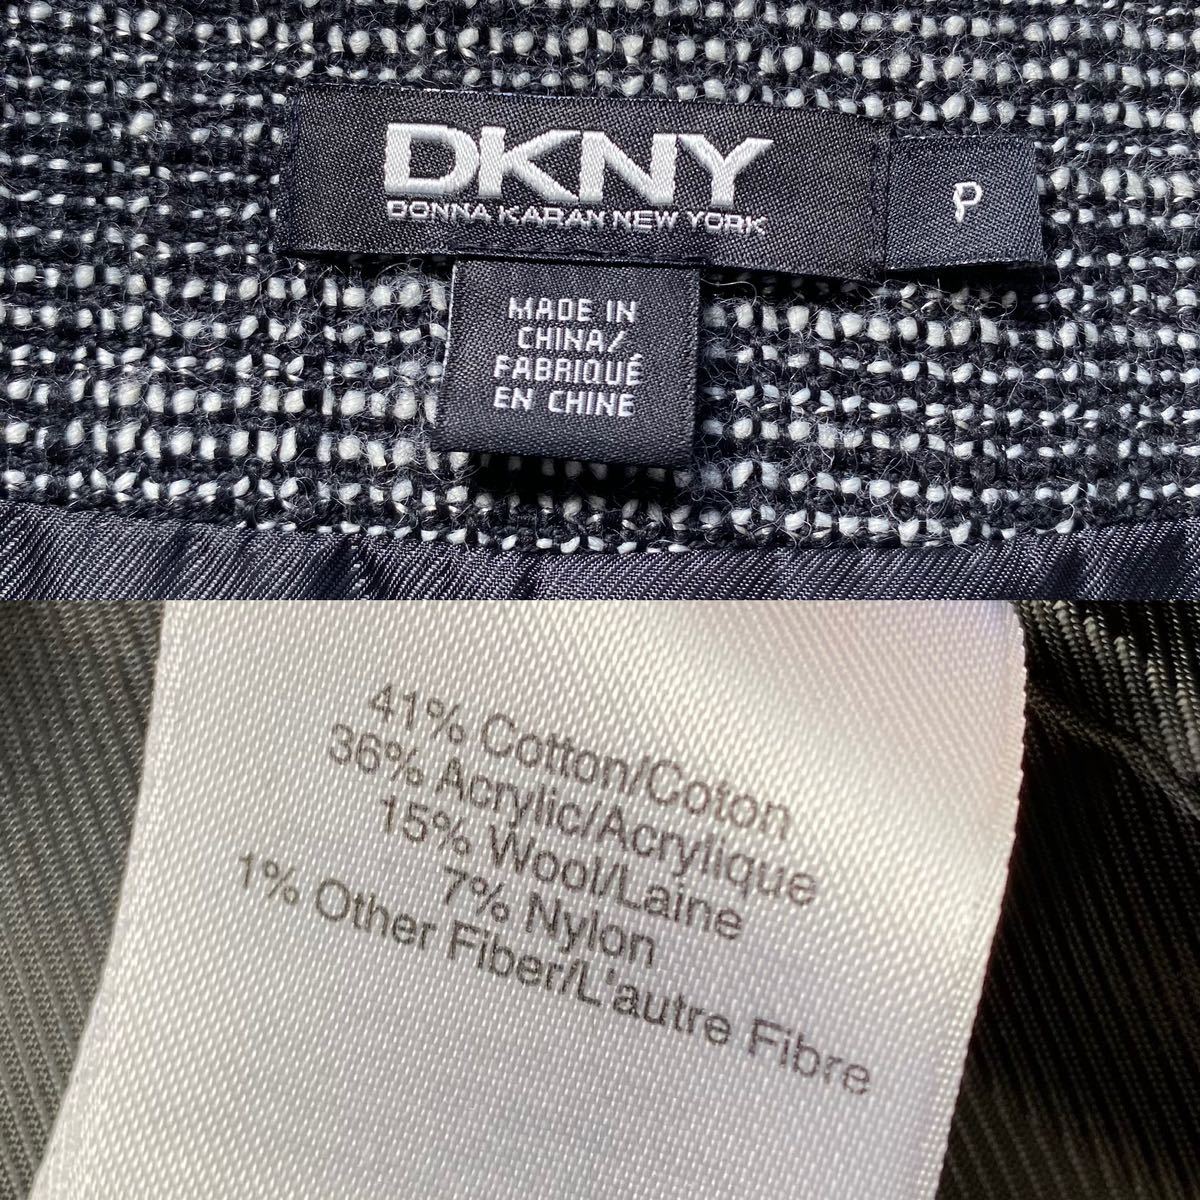 DKNY ダナキャランニューヨーク◆ノーカラー コクーンコート ラグラン袖 ツイード 白黒 チェック サイズp y23050403_画像10